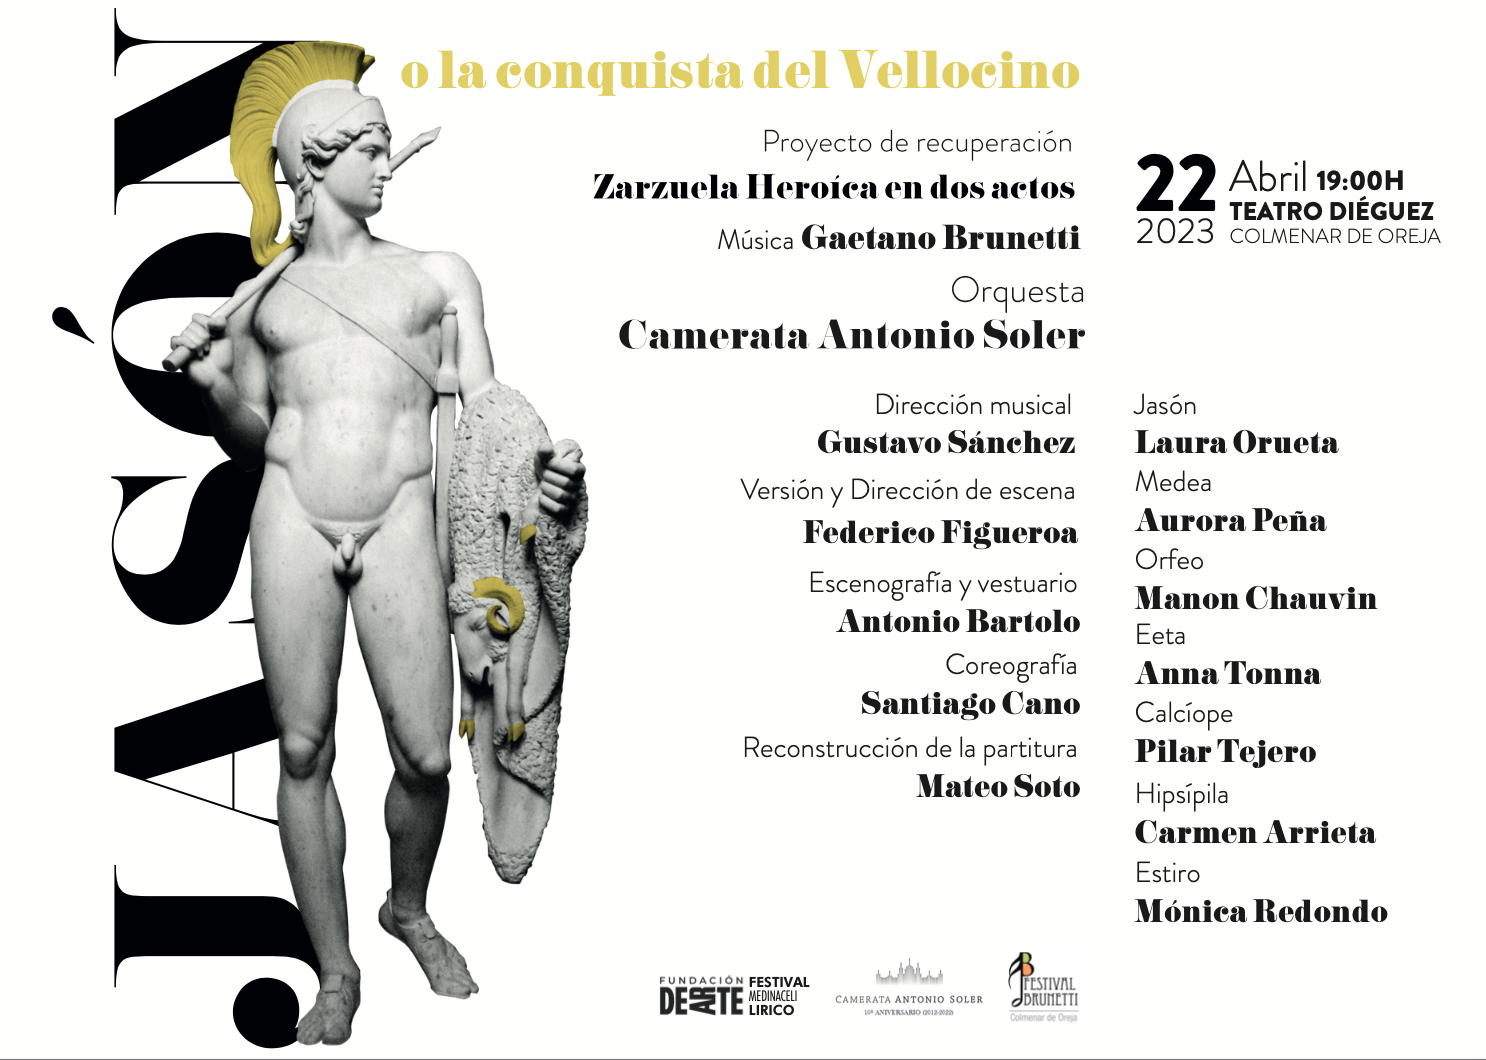 Cartel promocional de la zarzuela "Jasón" programada en el II Festival Brunetti 